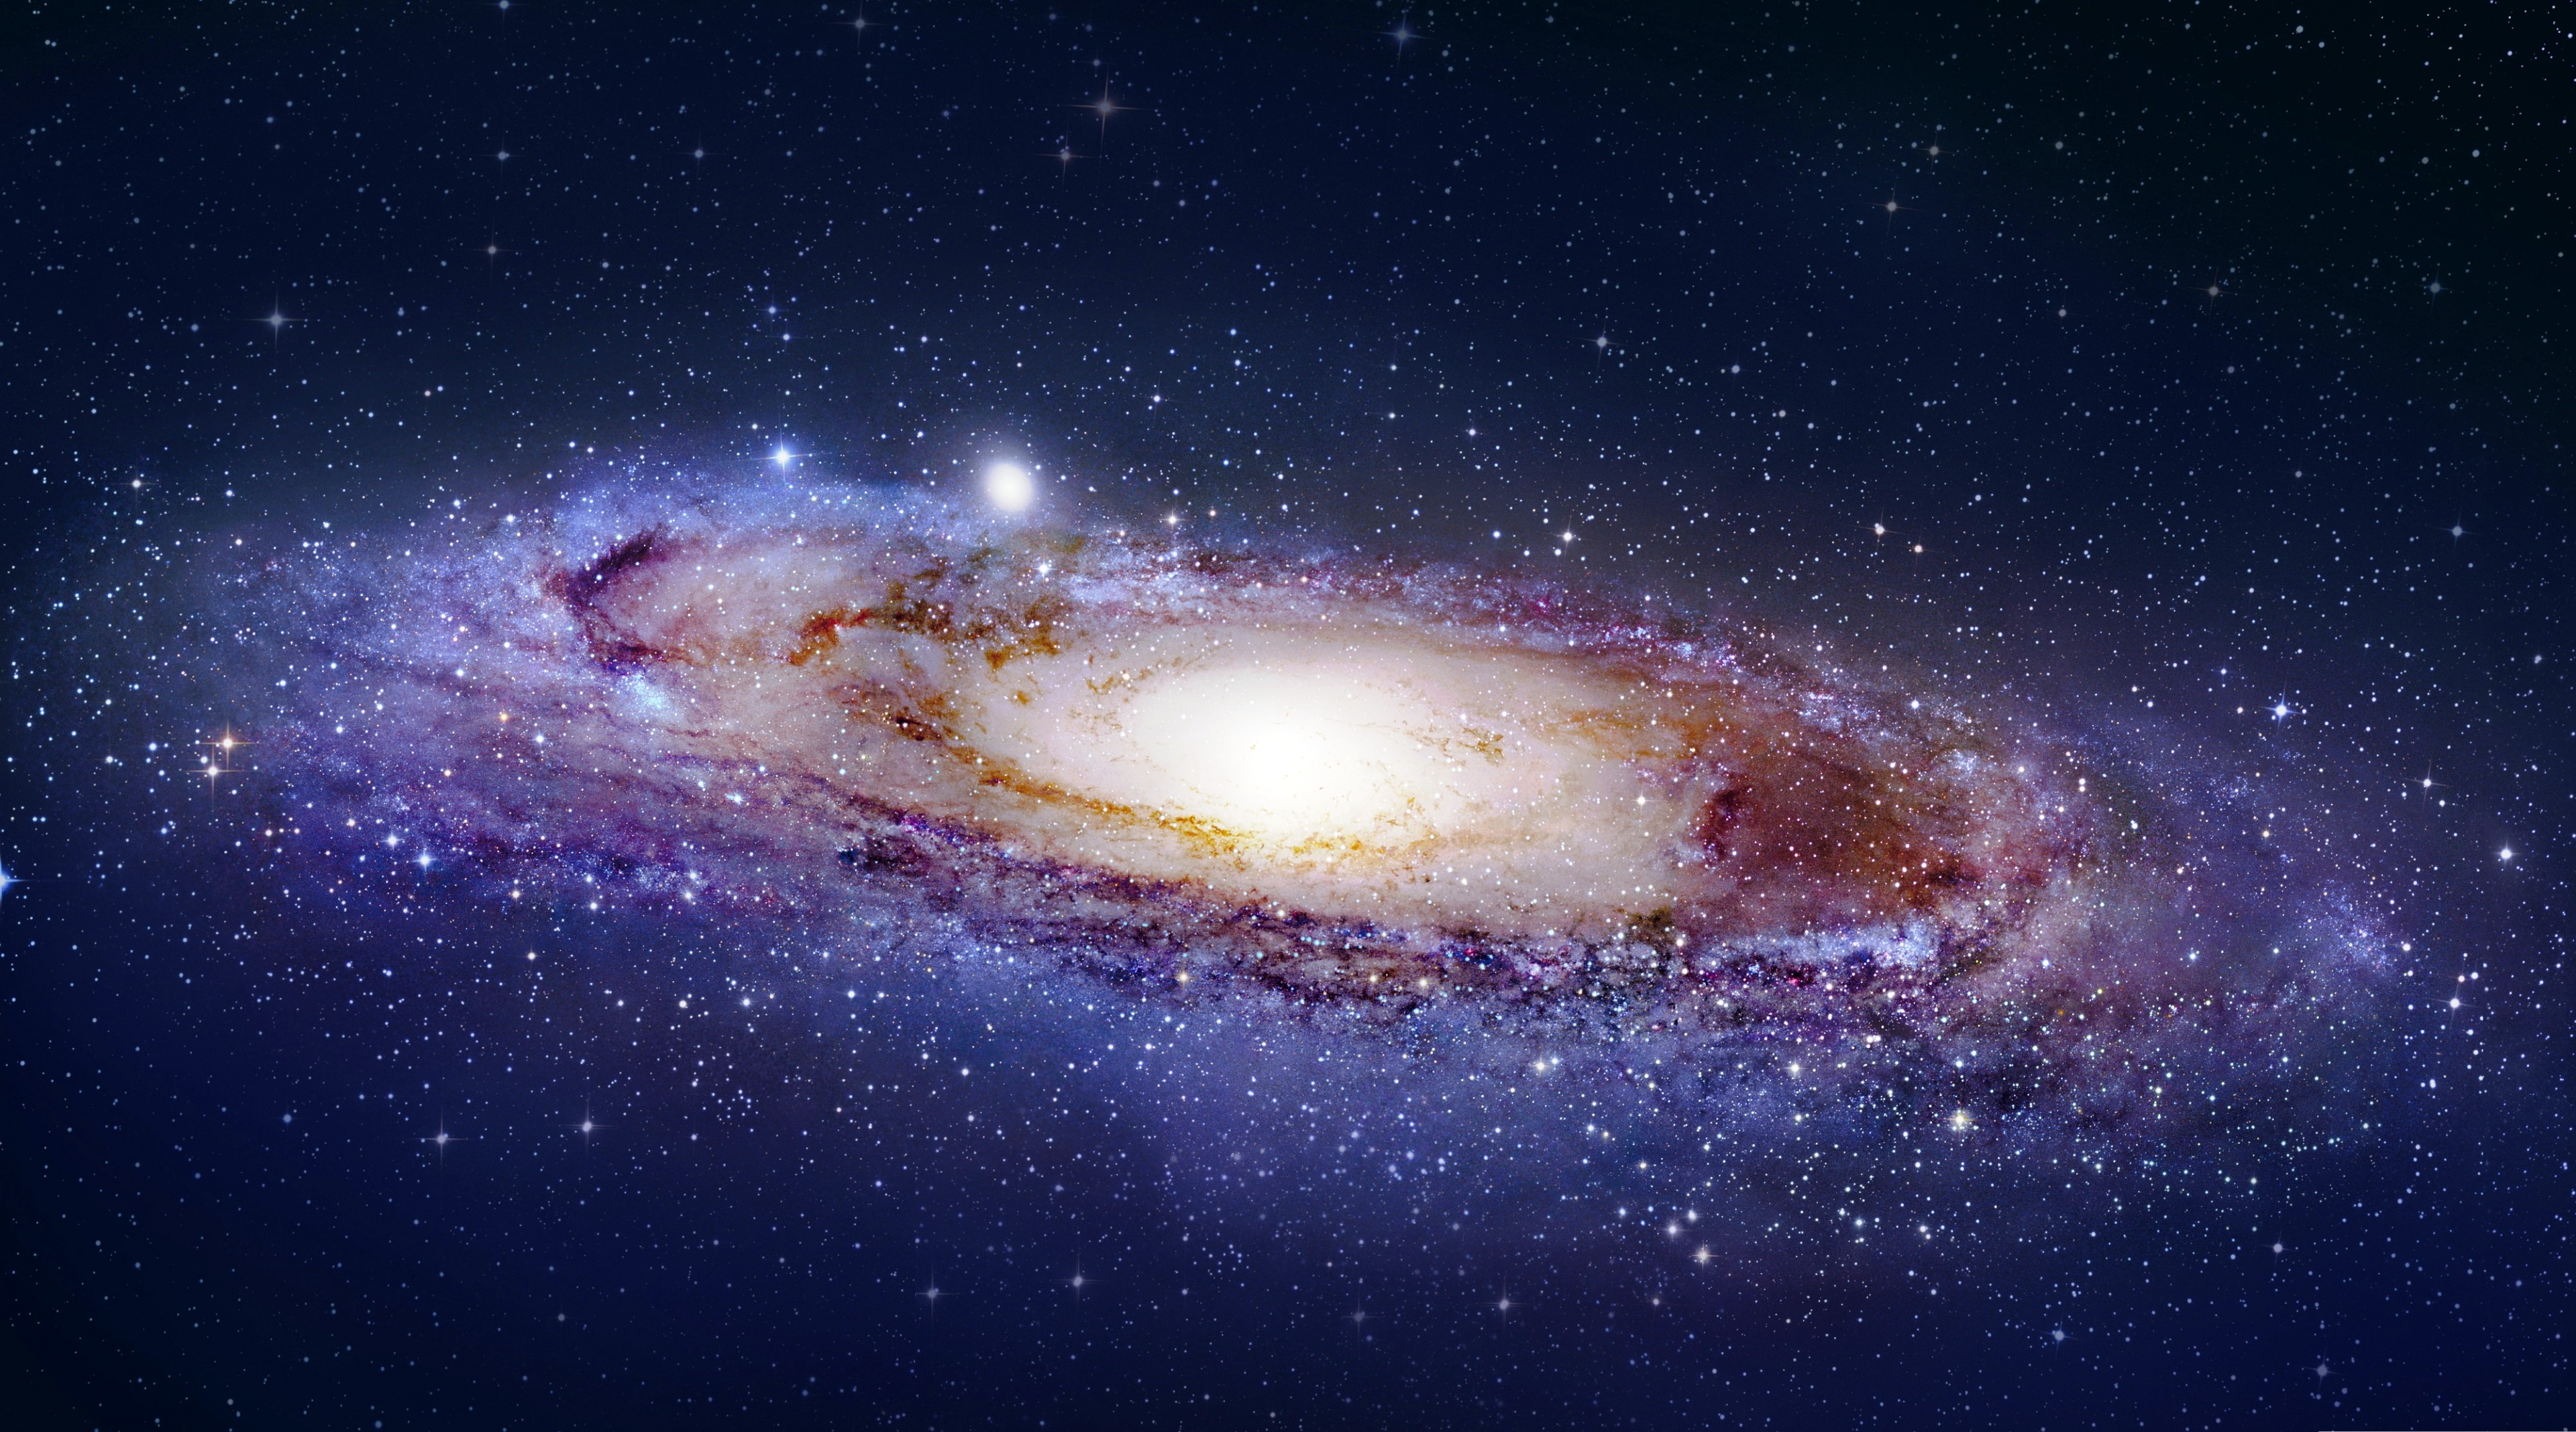 Milky Way Galaxy Wallpaper HD